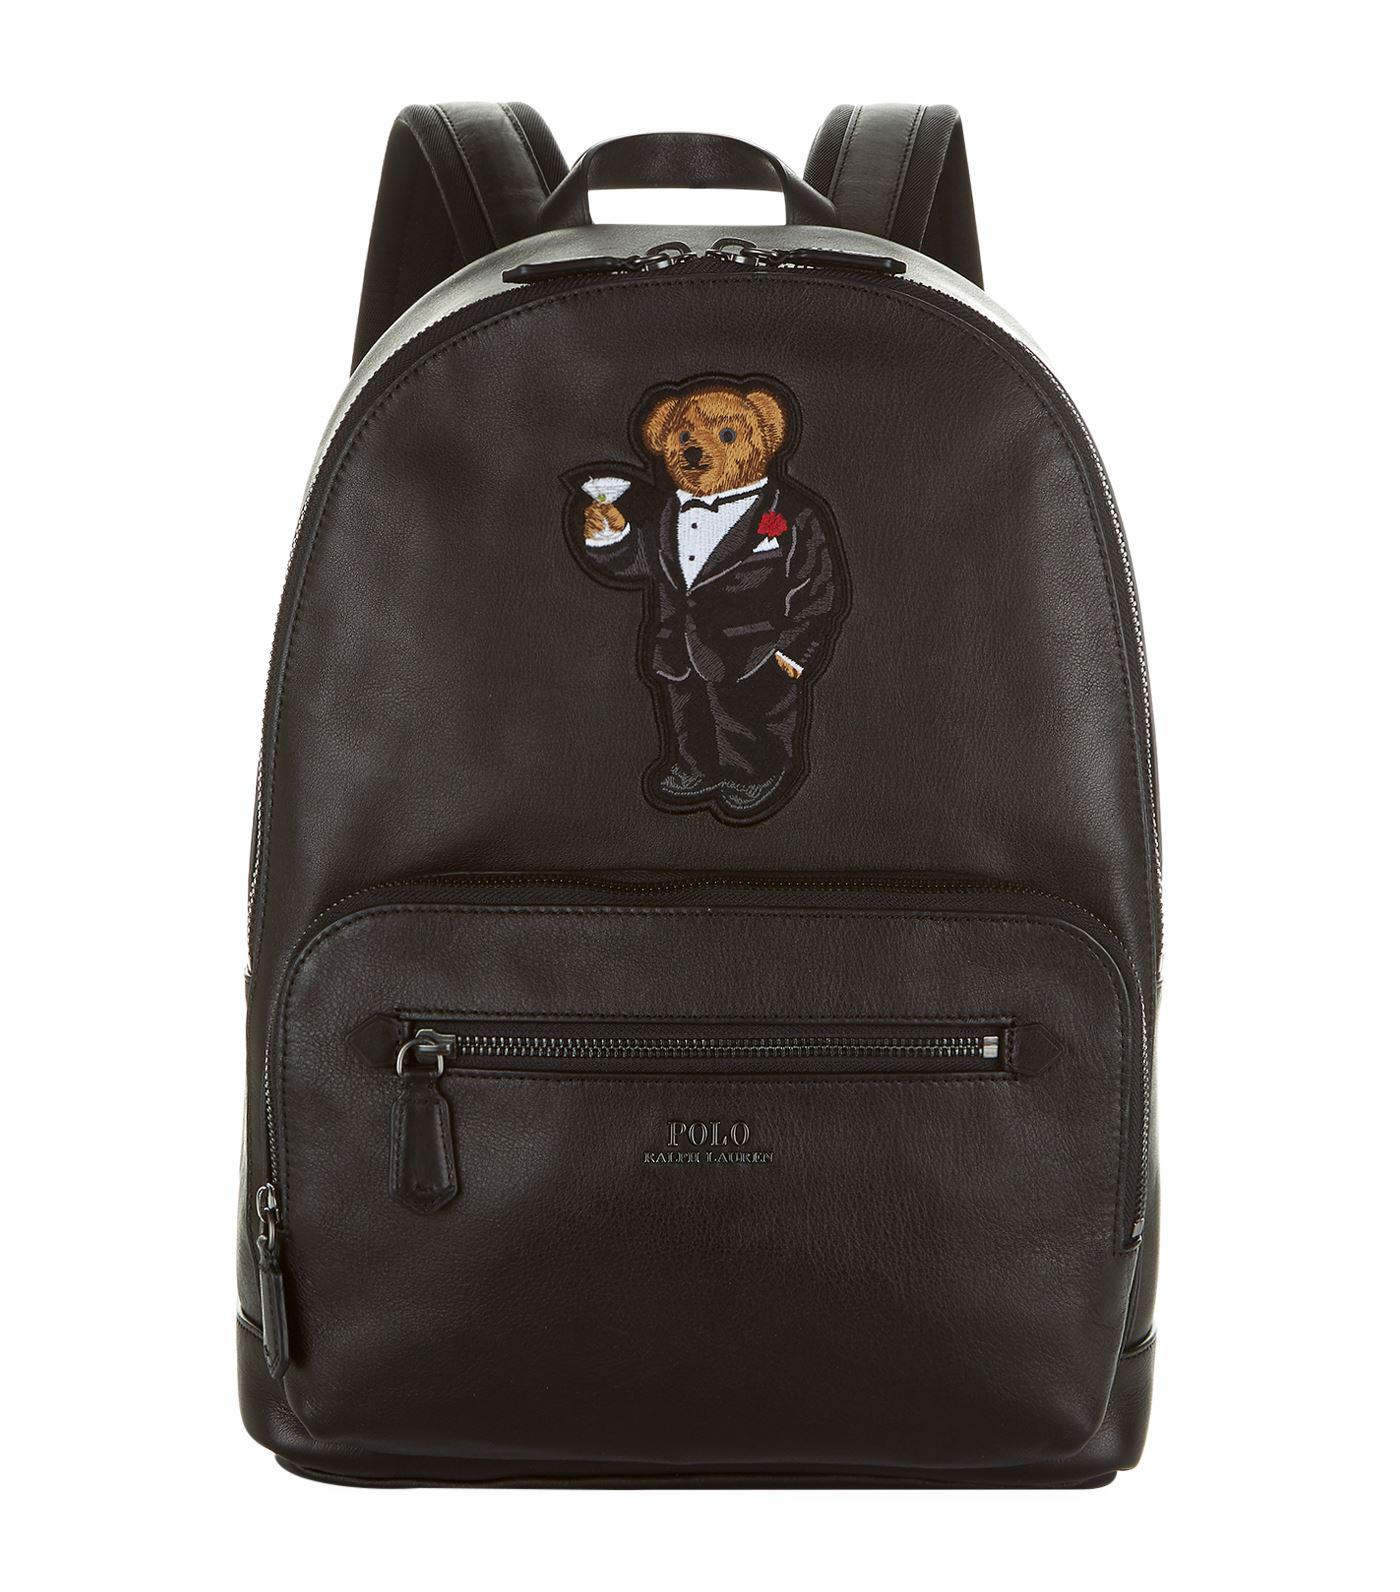 Polo Ralph Lauren Bear Motif Leather Backpack in Black - Lyst